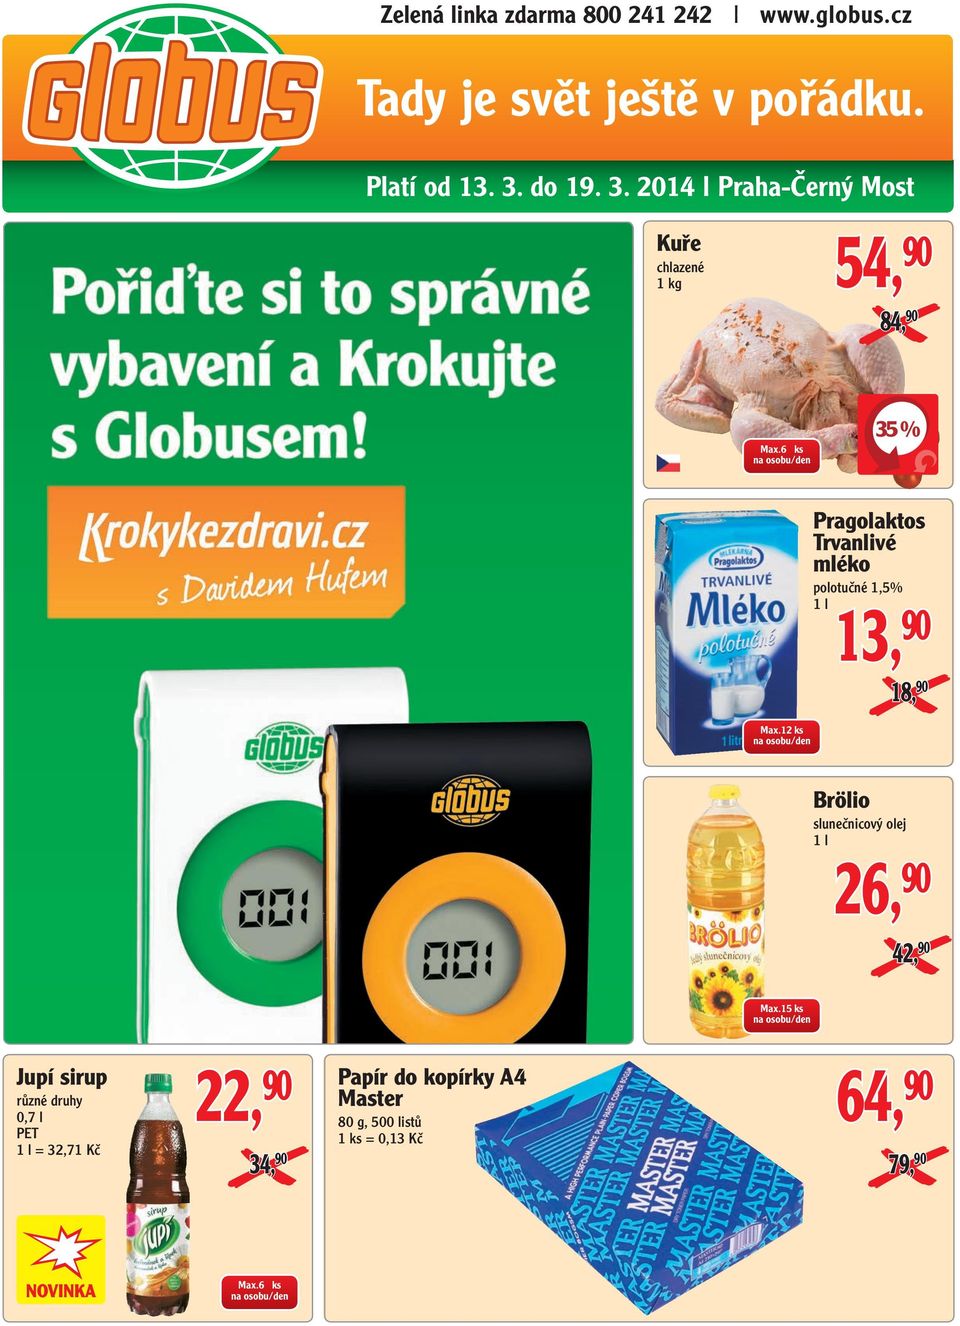 6 ks na osobu/den 35 % Pragolaktos Trvanlivé mléko polotučné 1,5% 1 l 13, 90 18, 90 Max.